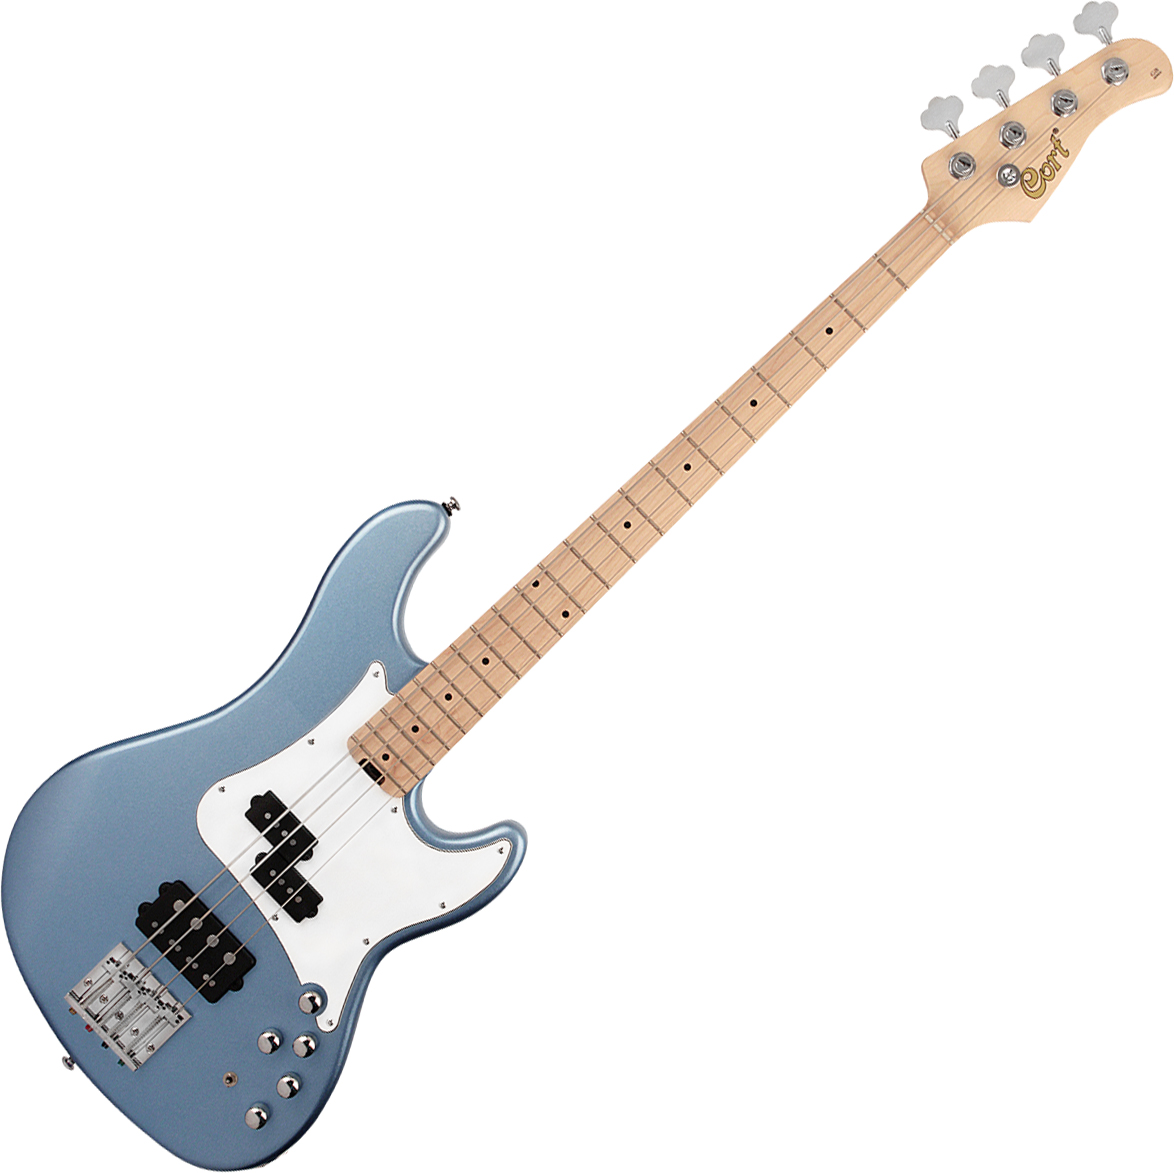 Cort GB74 Gig - lake placid blue Solid body electric bass blue